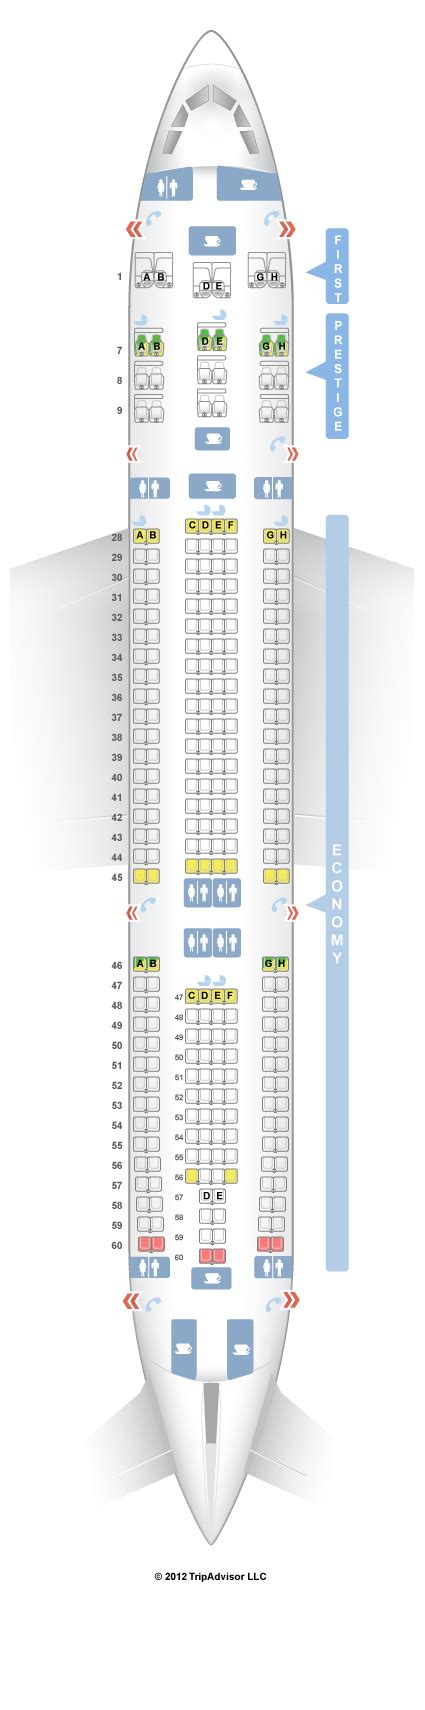 Korean Air A Seat Map Sexiz Pix